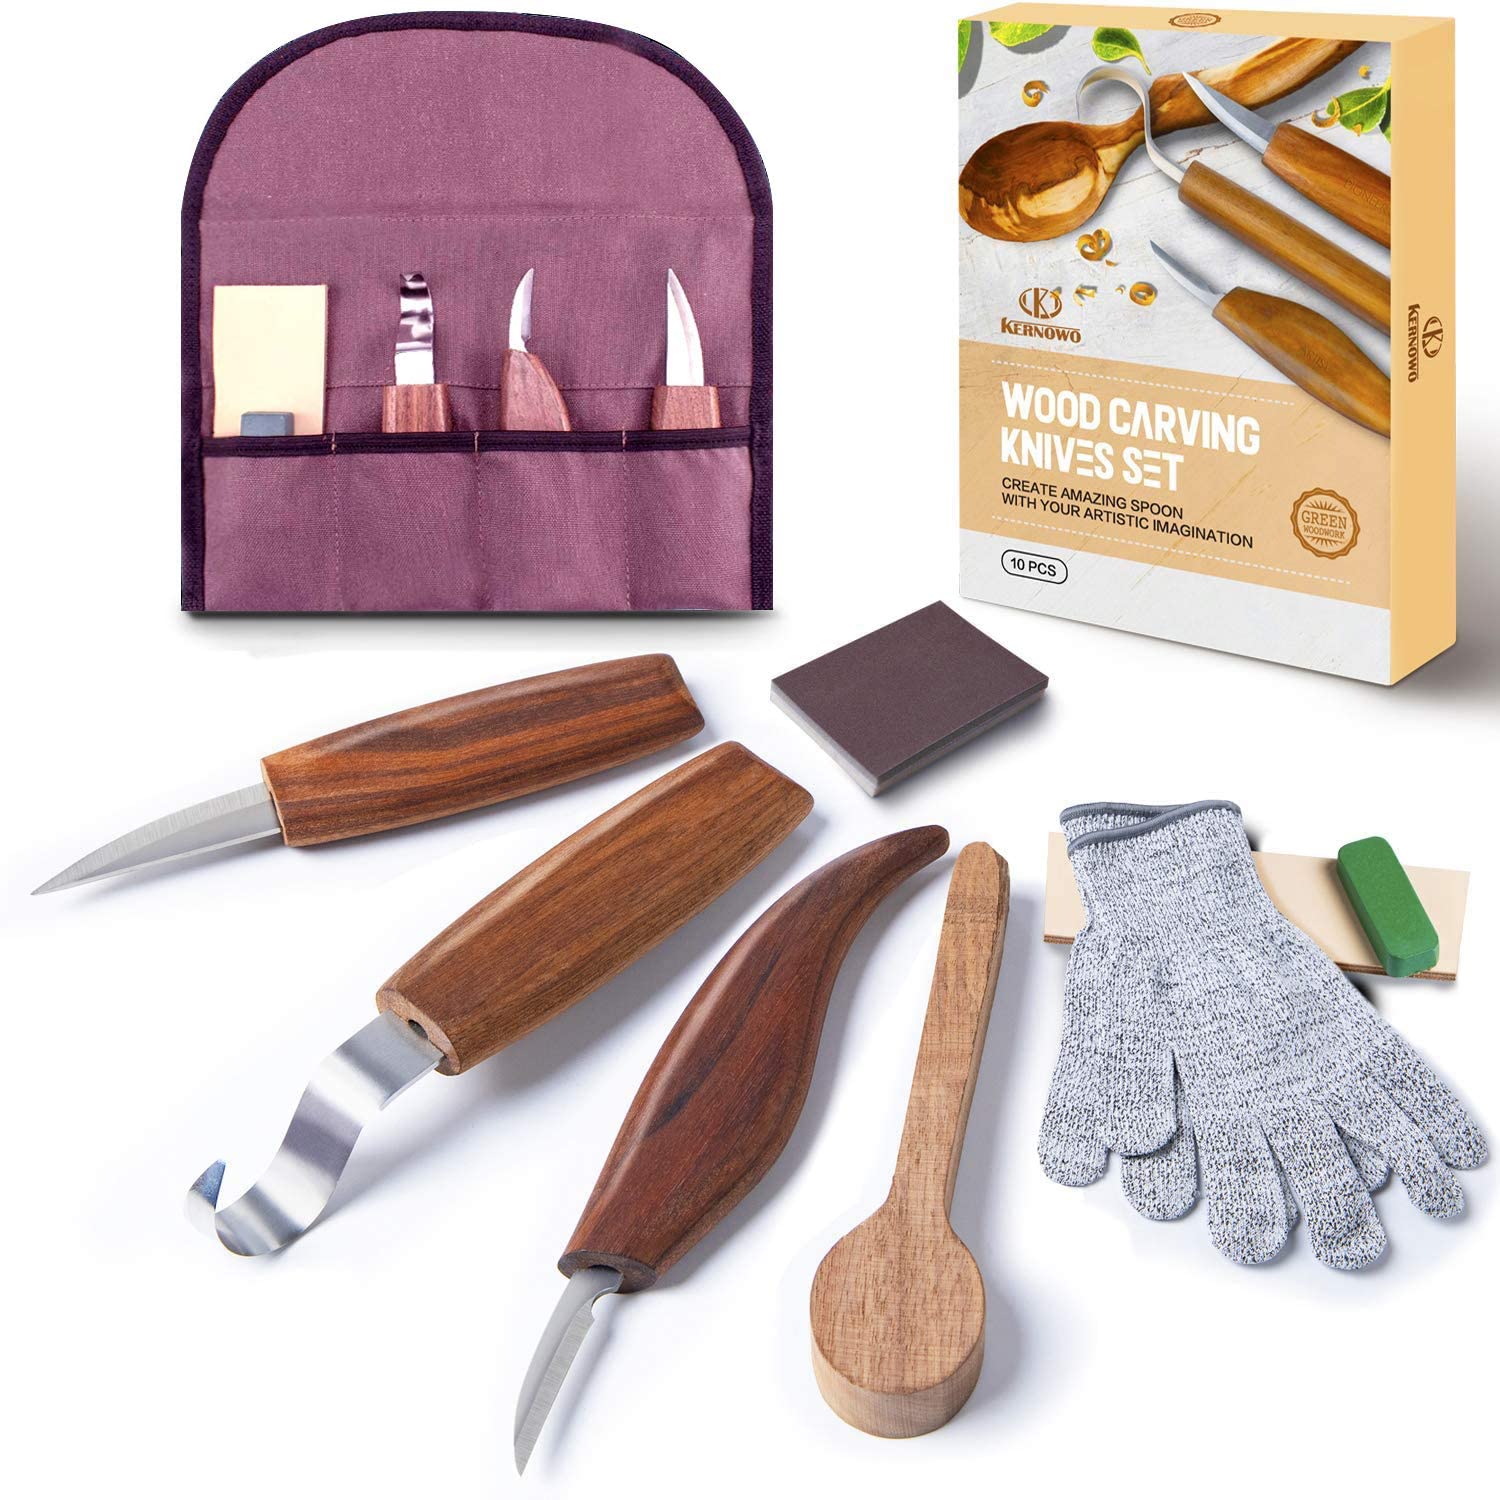 KERNOWO Wood Carving Knife Set